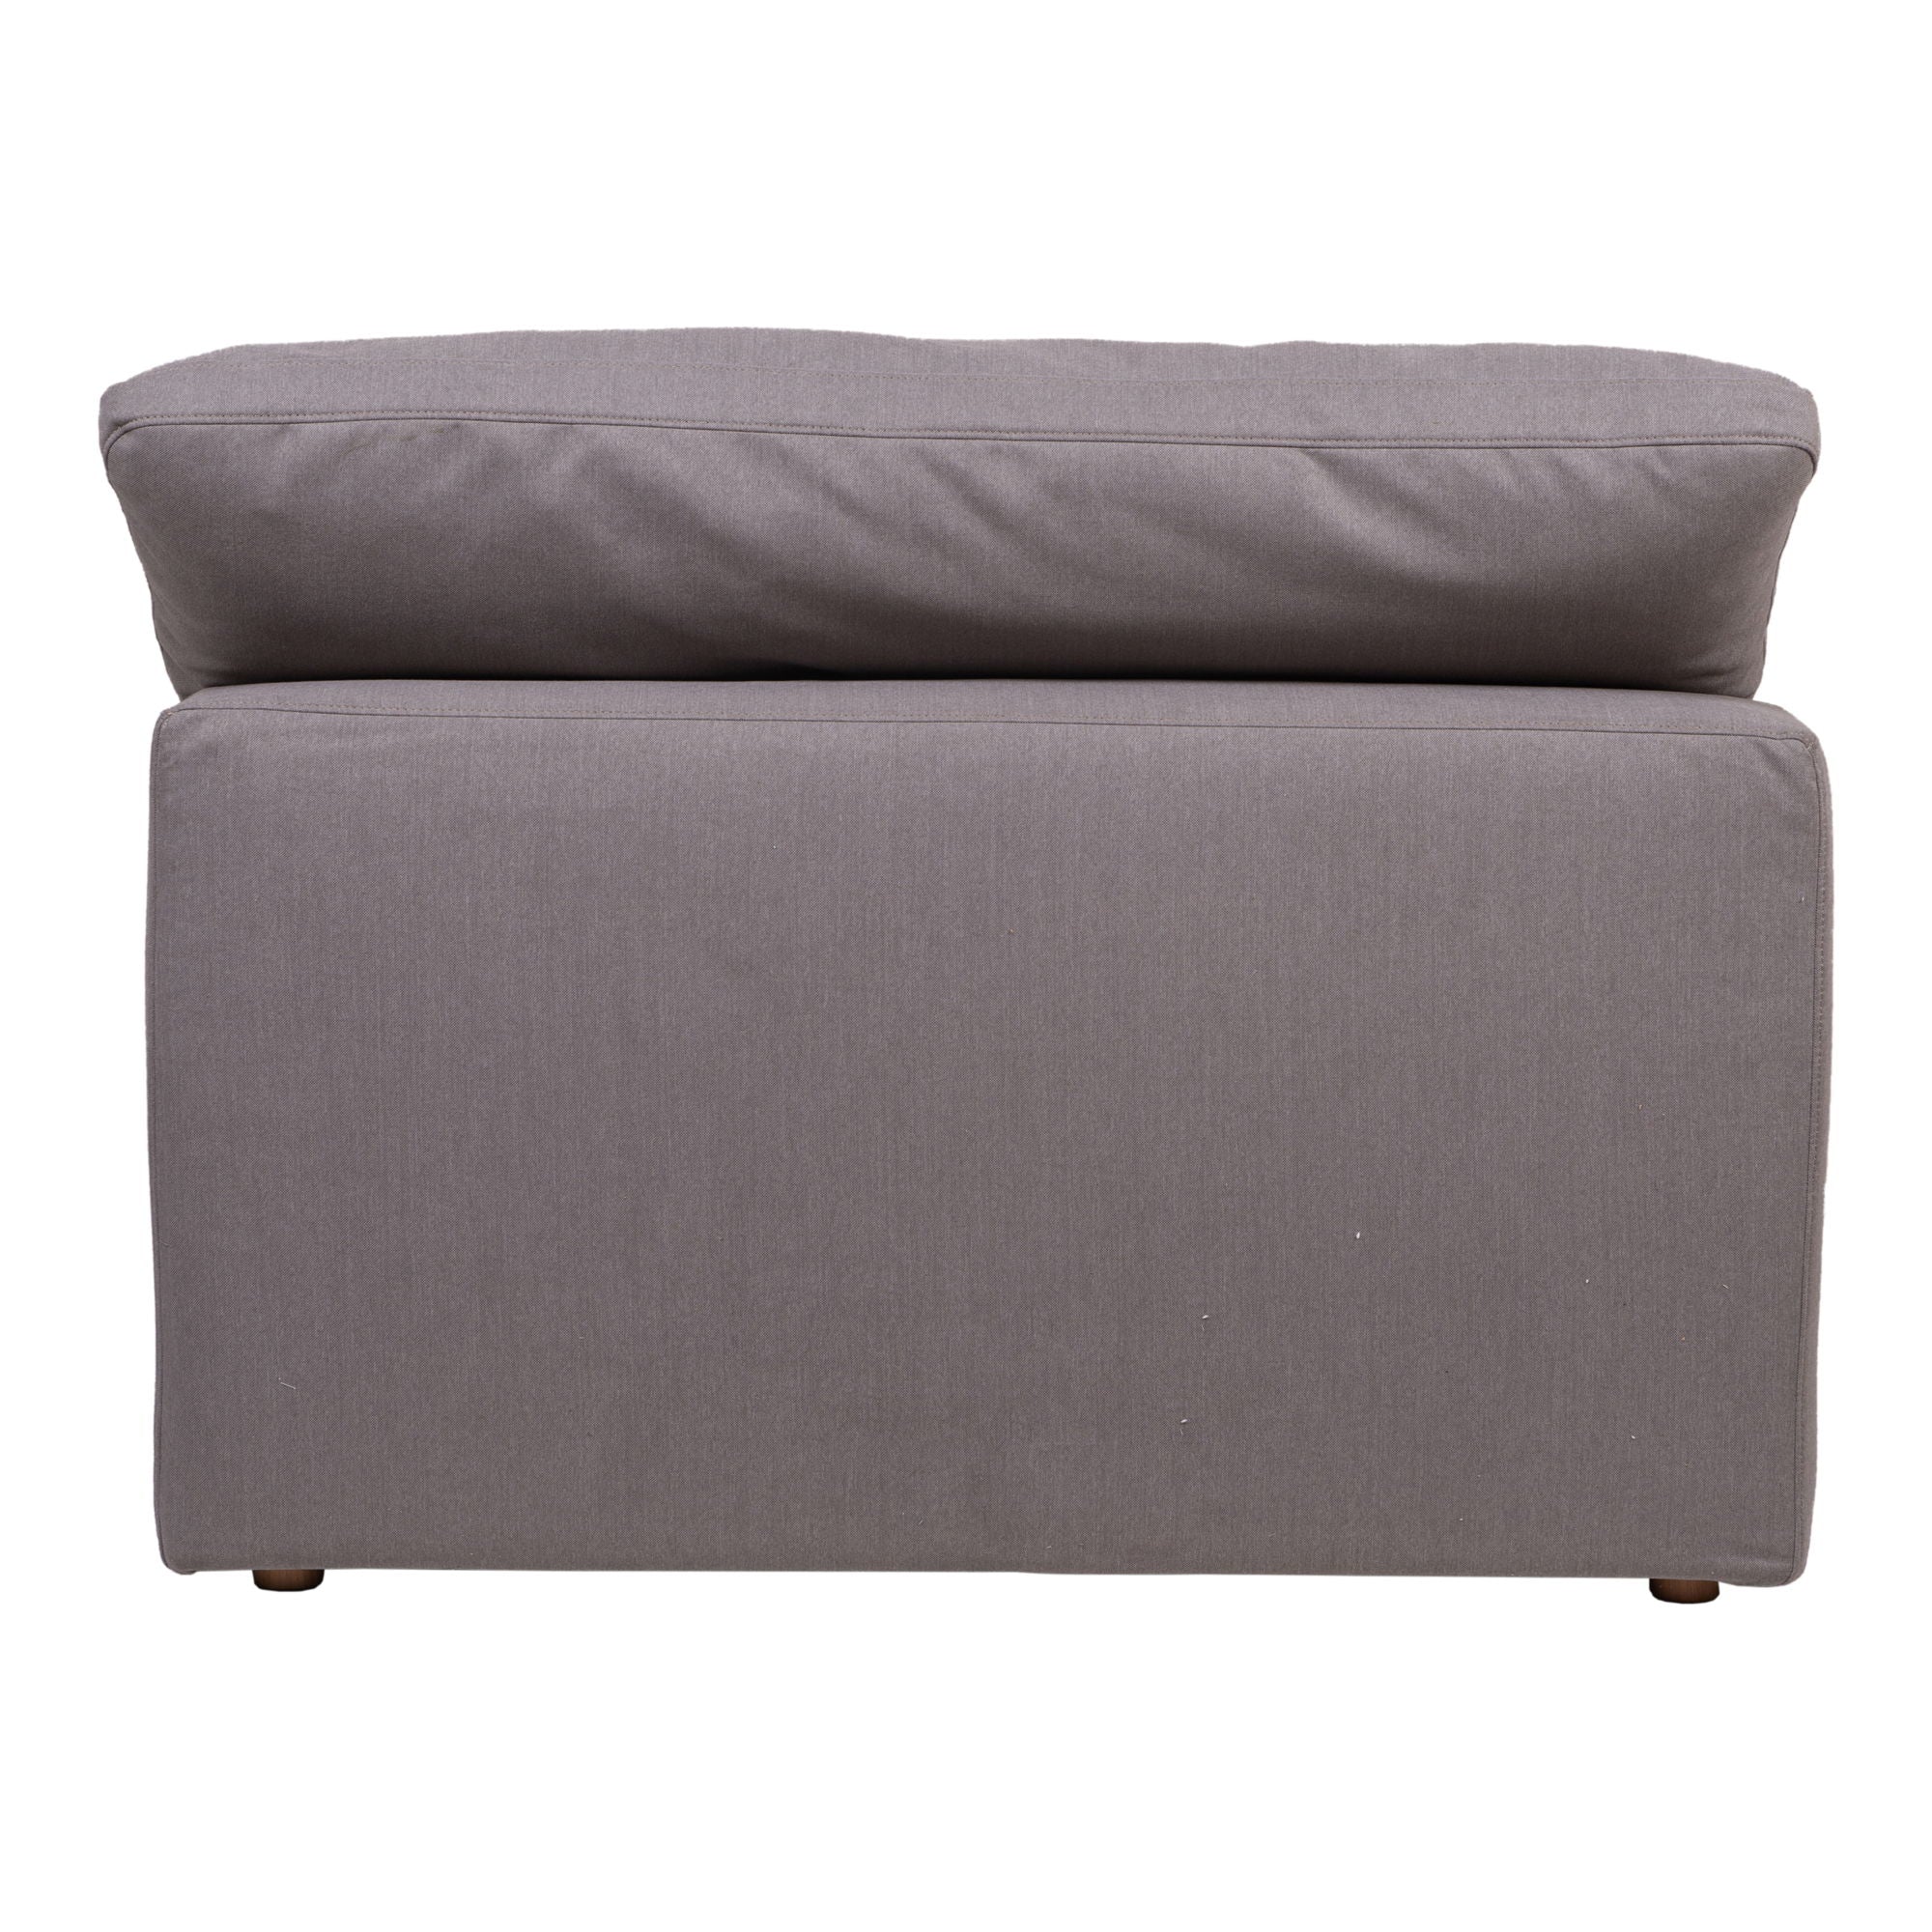 Clay - Slipper Chair Livesmart Fabric - Light Gray